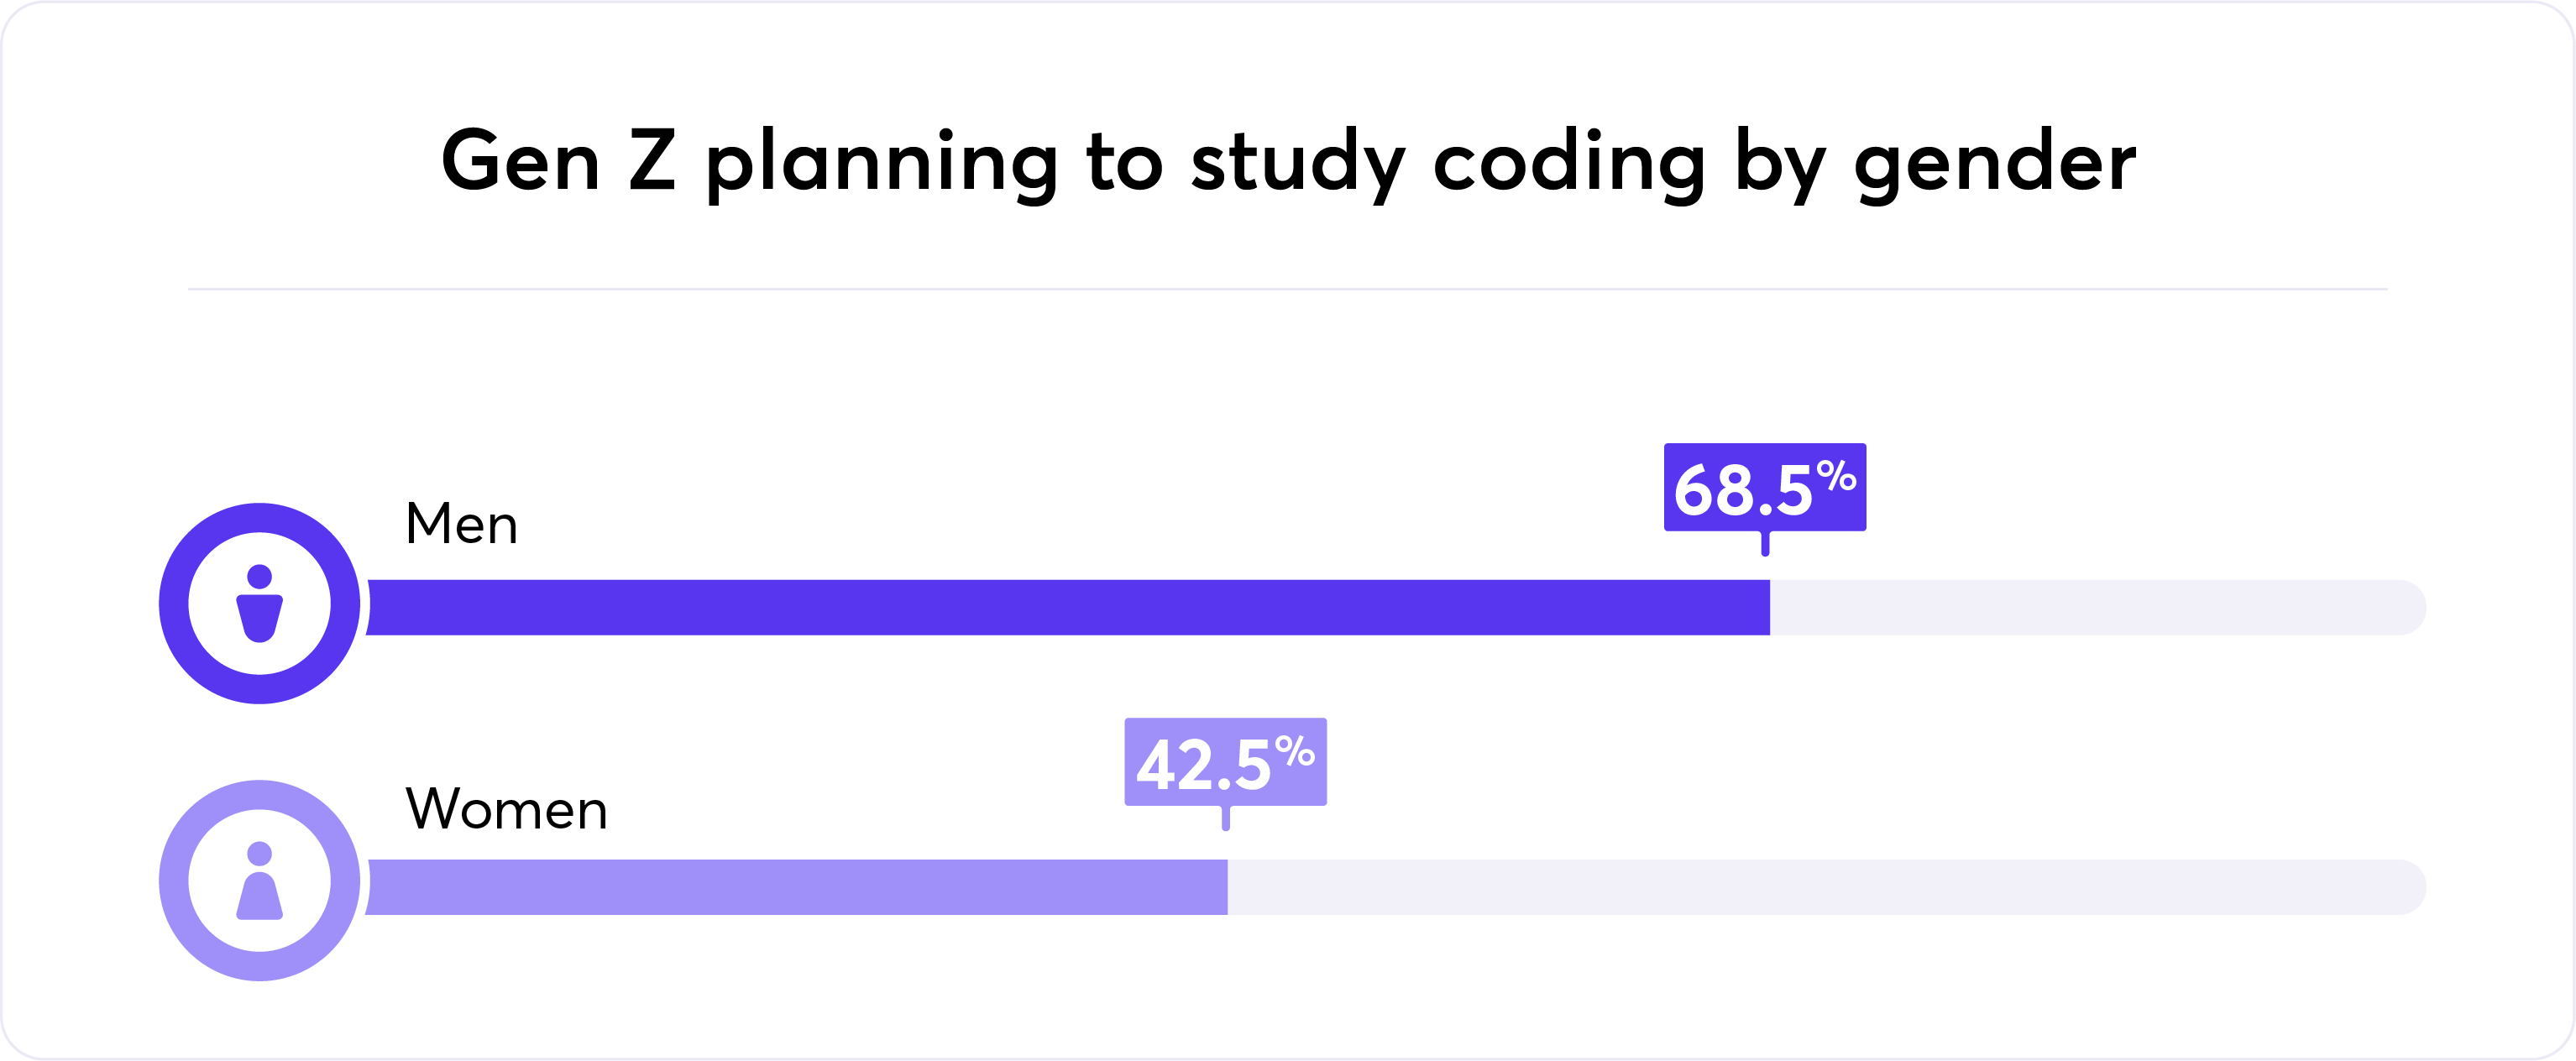 Gen Z planning to study coding by gender